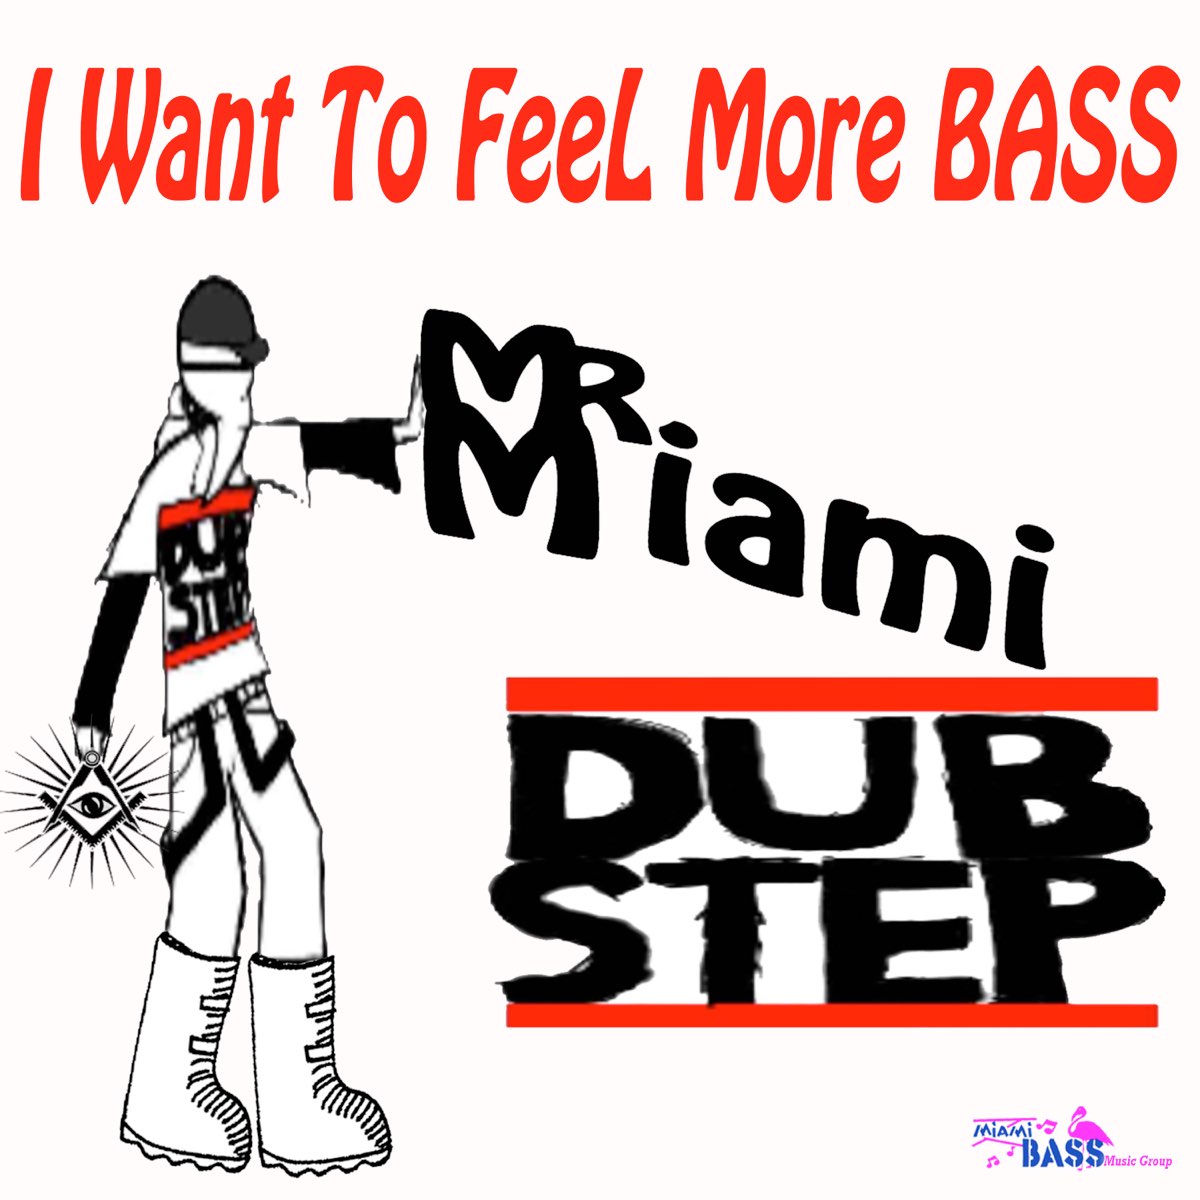 Мистер Майами. Mr Miami. More Bass is more good. More bass